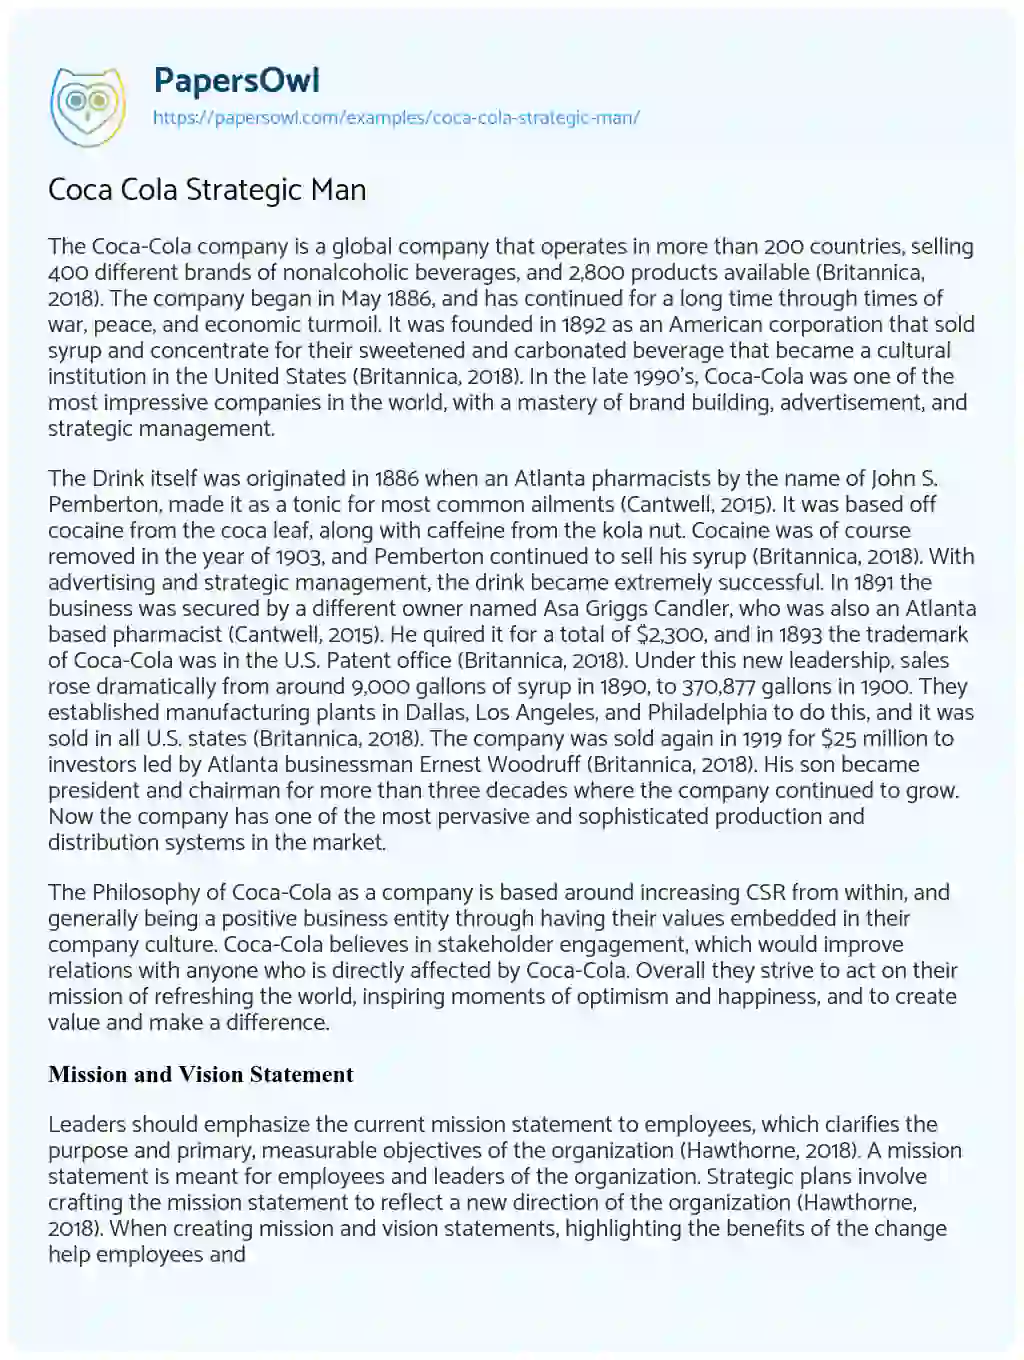 Essay on Coca Cola Strategic Man